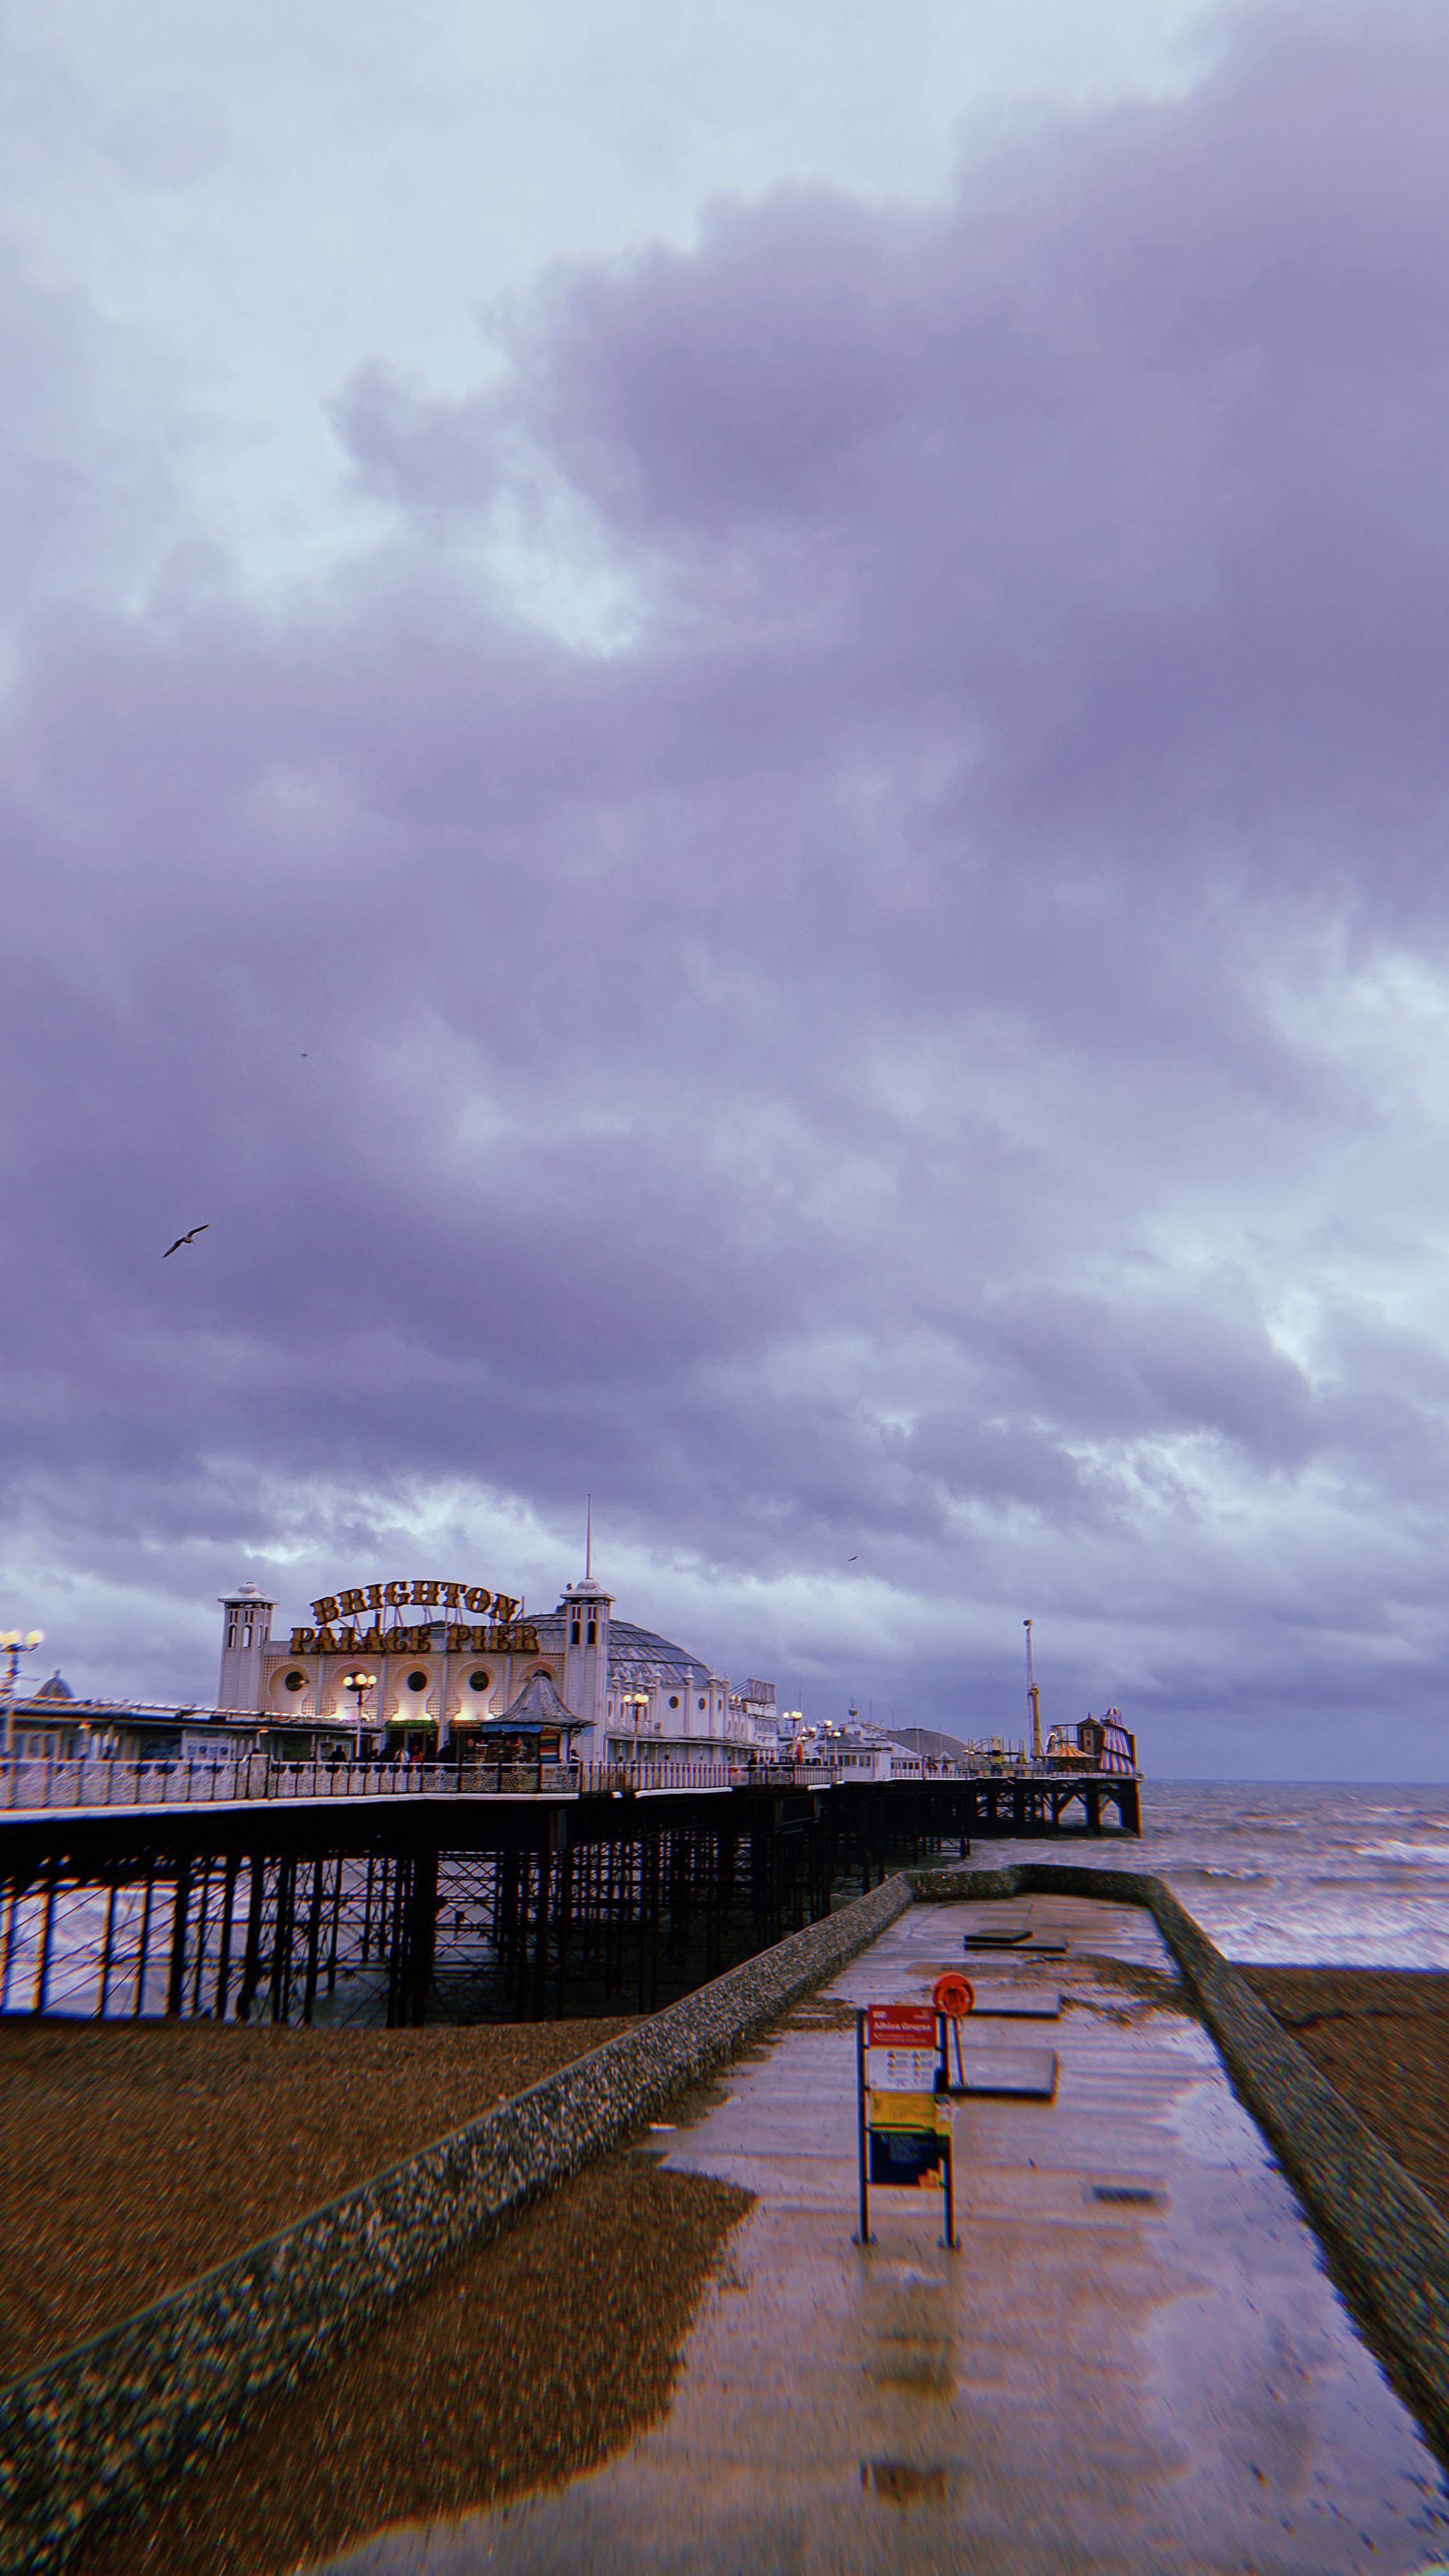 7 seconds of Brighton ! #igreels #reels #vlog #brightonpier #londonblogger